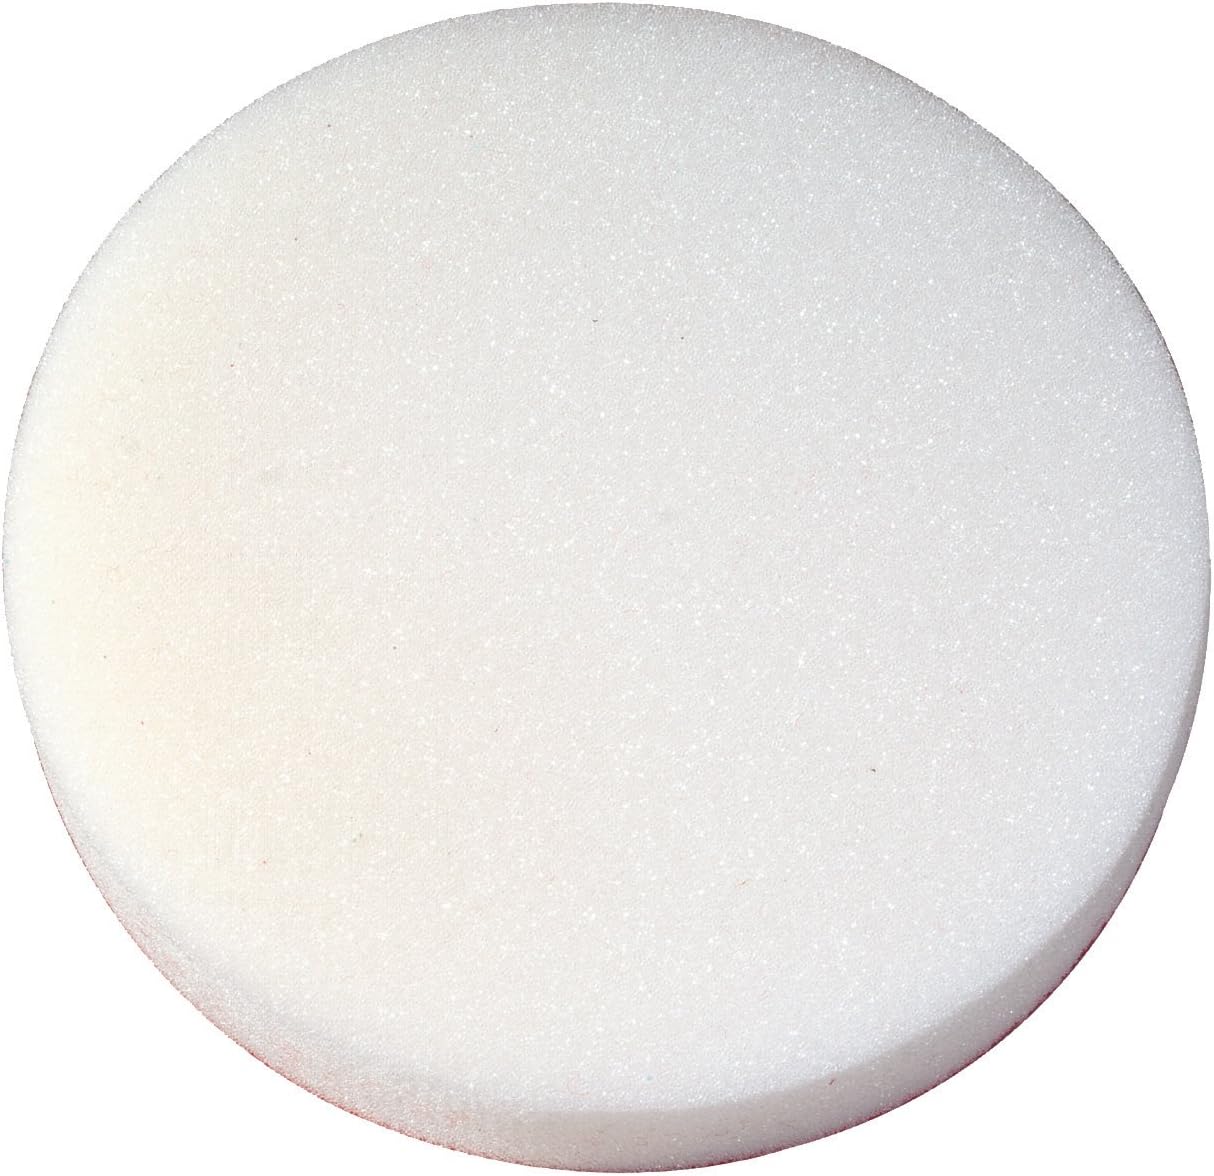 BOSCH RS013 5 In. Sponge Applicator Pad , White